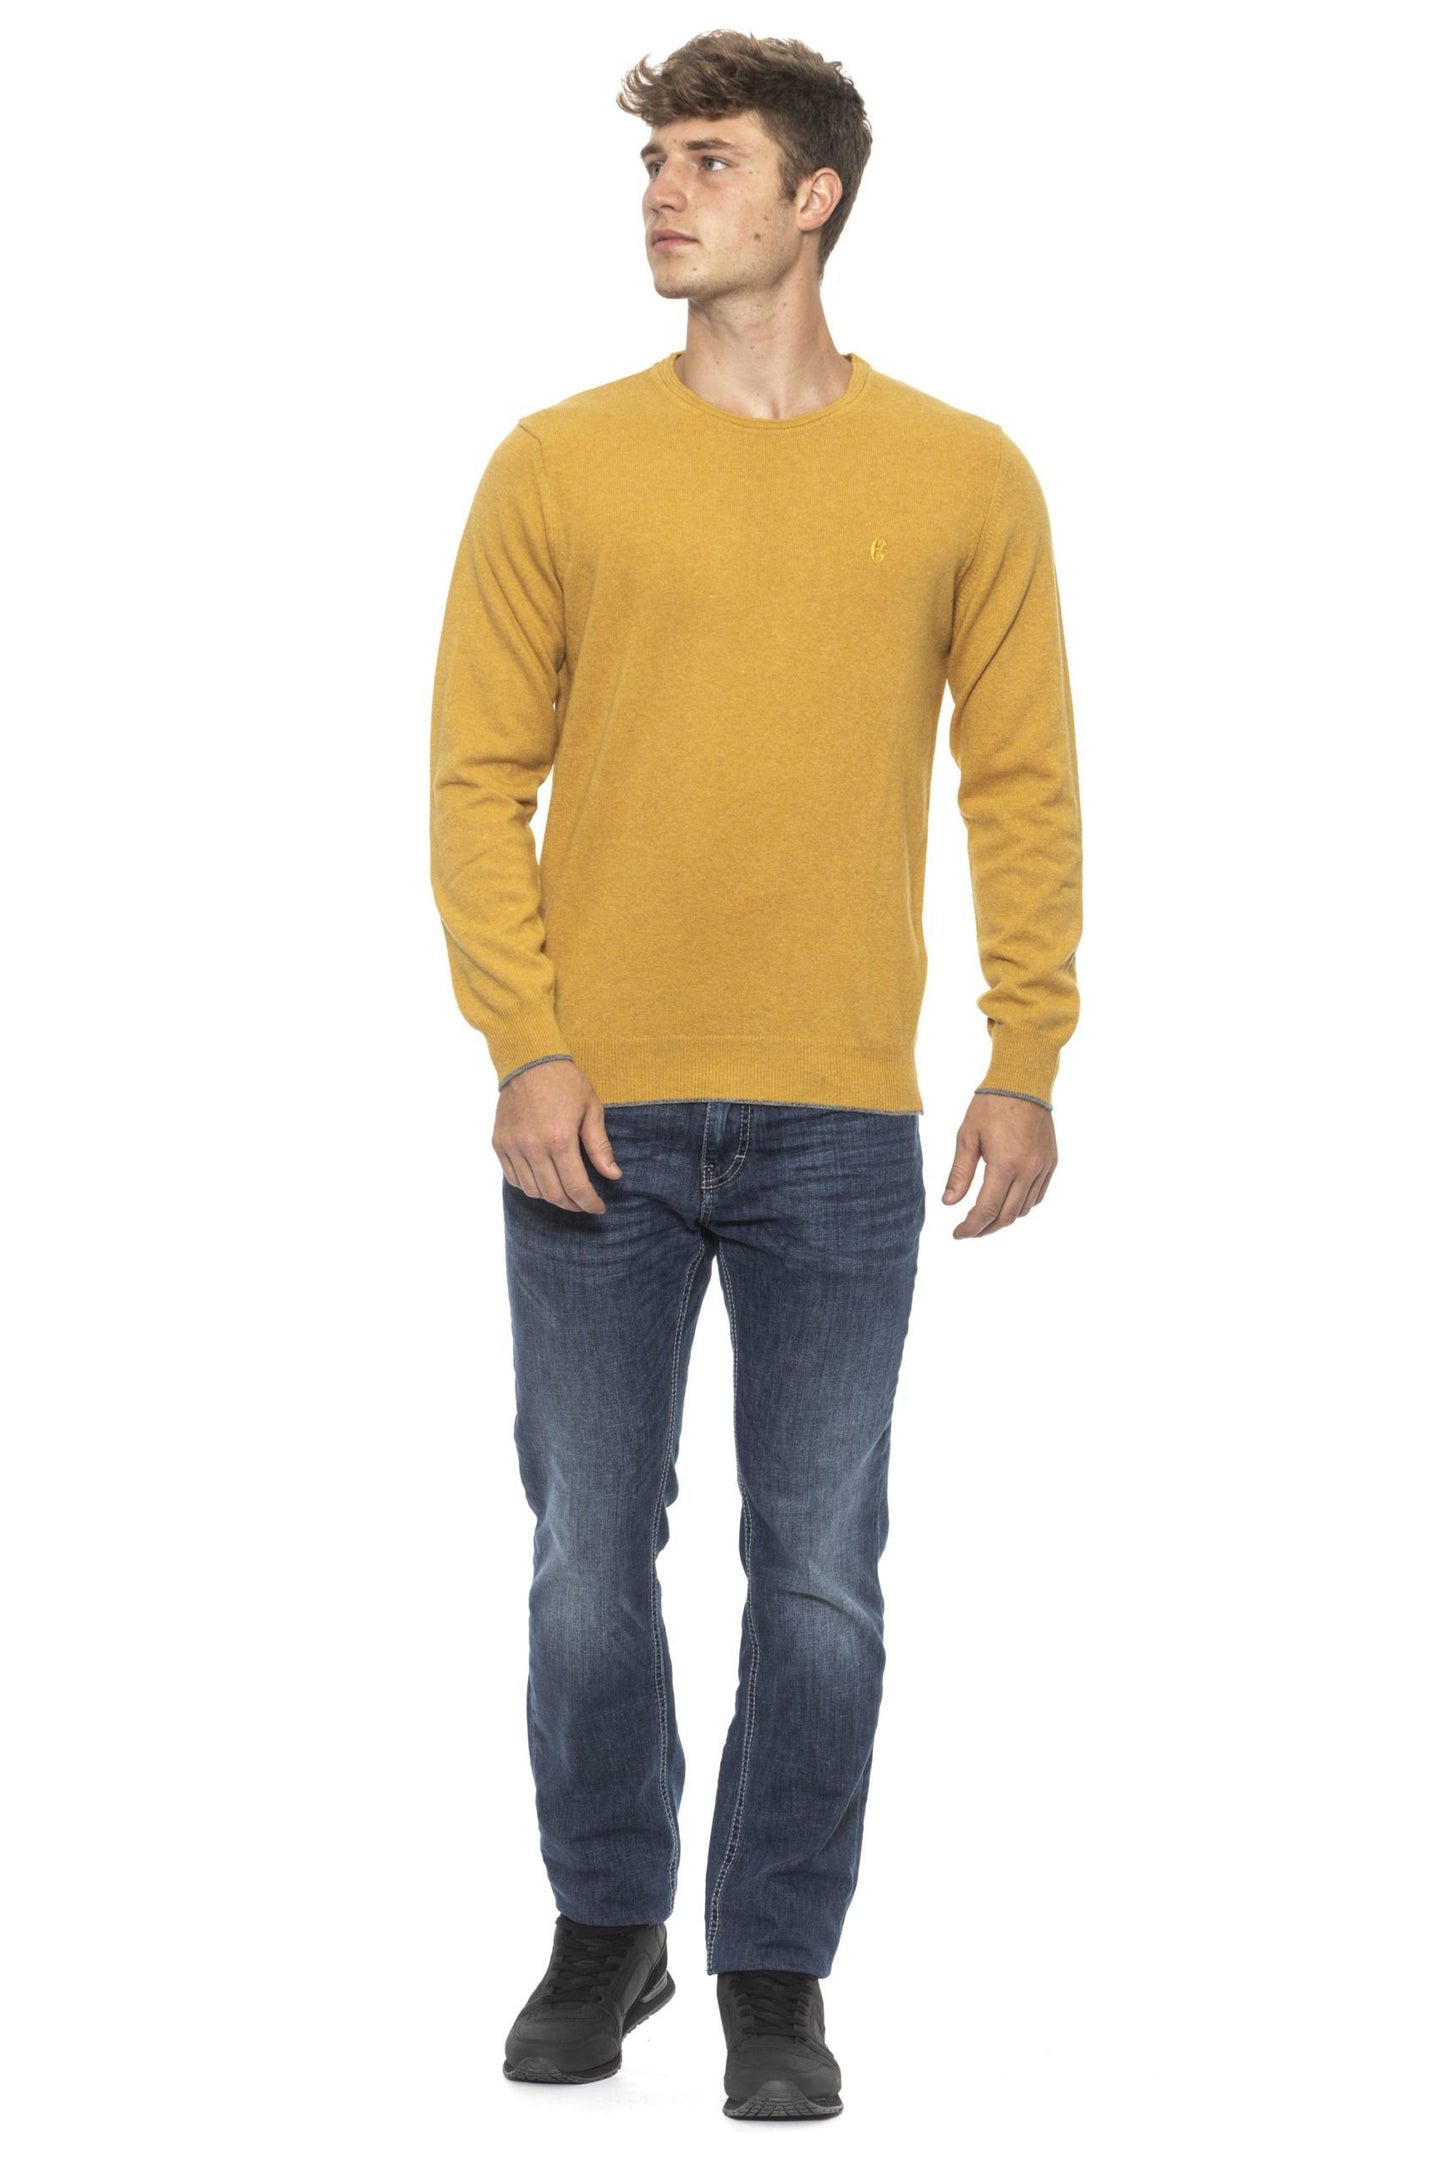 Sunshine Yellow Crew Neck Sweater - Winter Essential